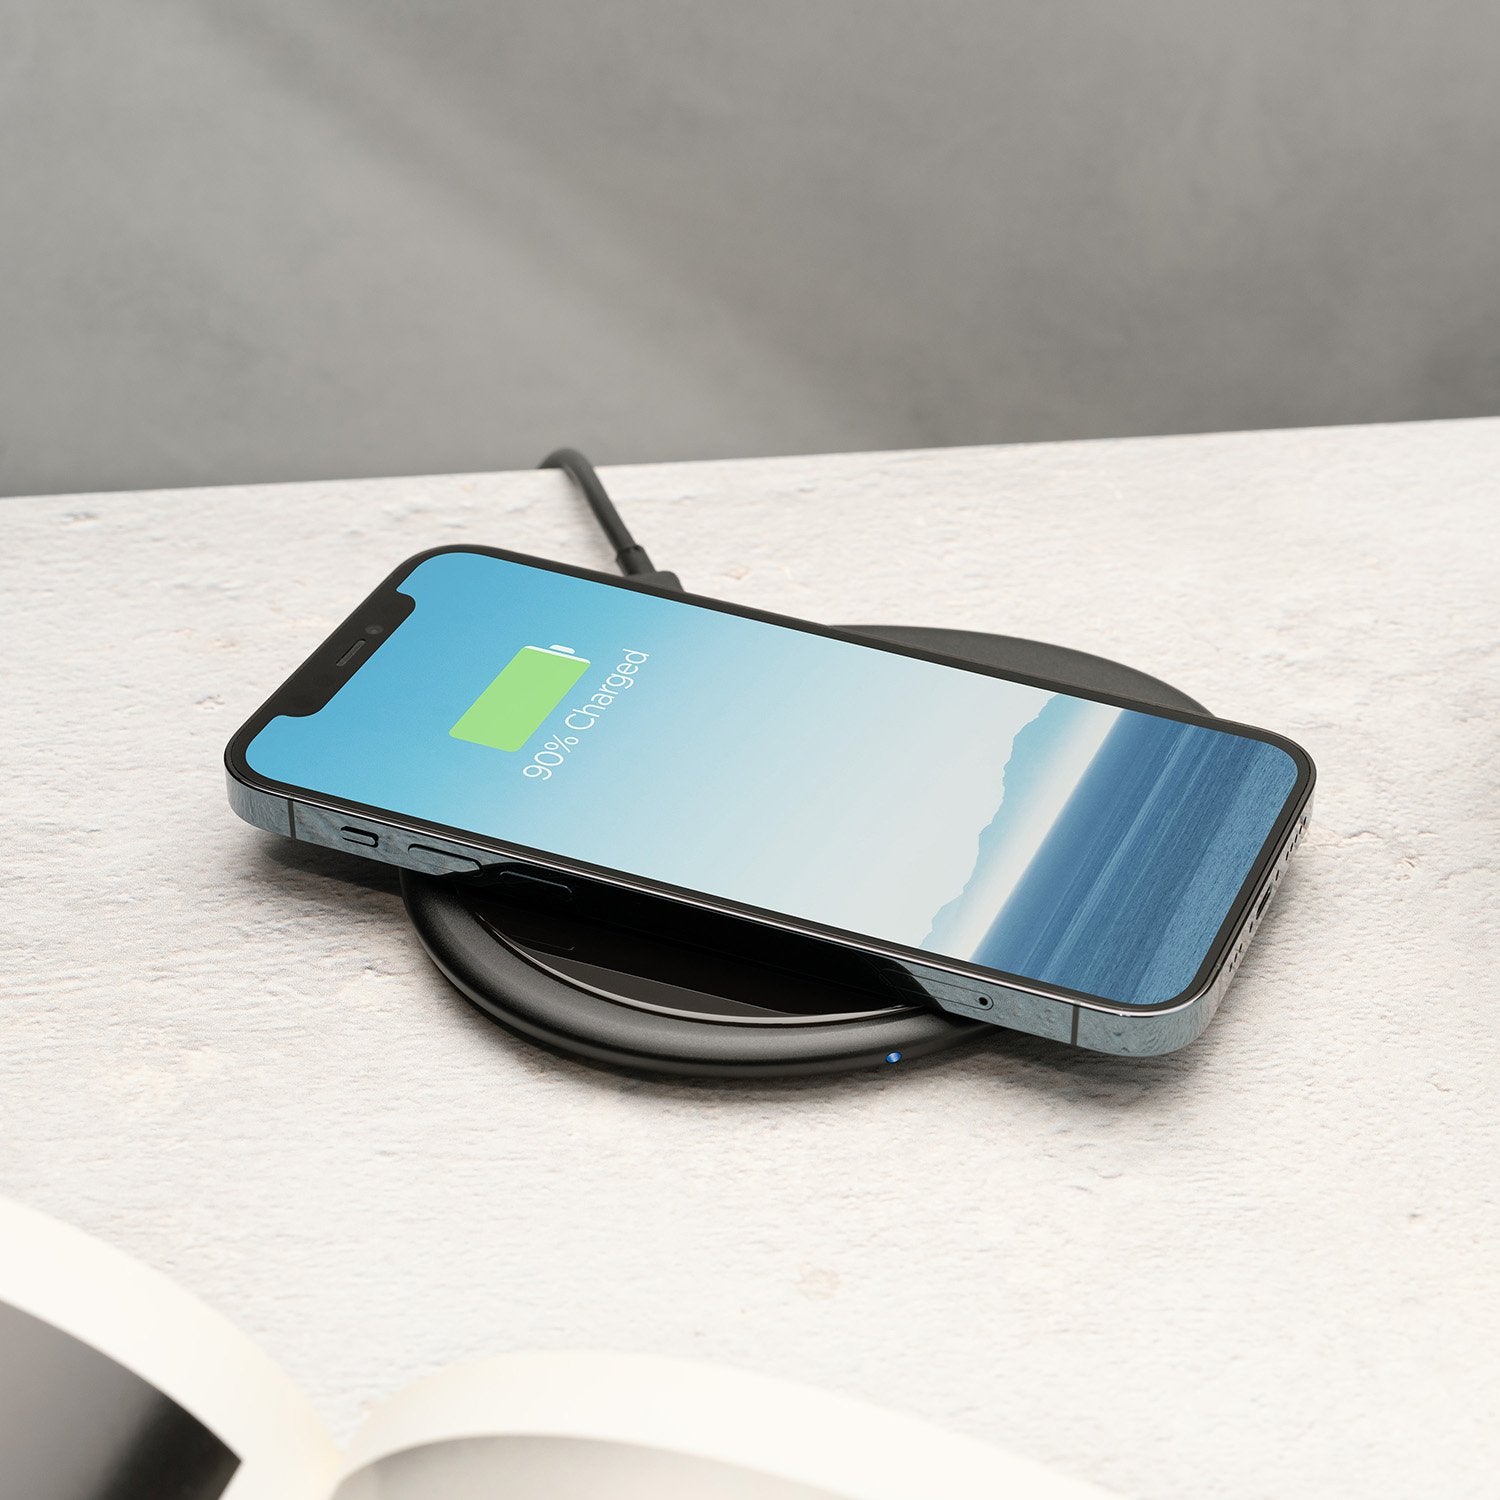 Phone on black pebble charging pad